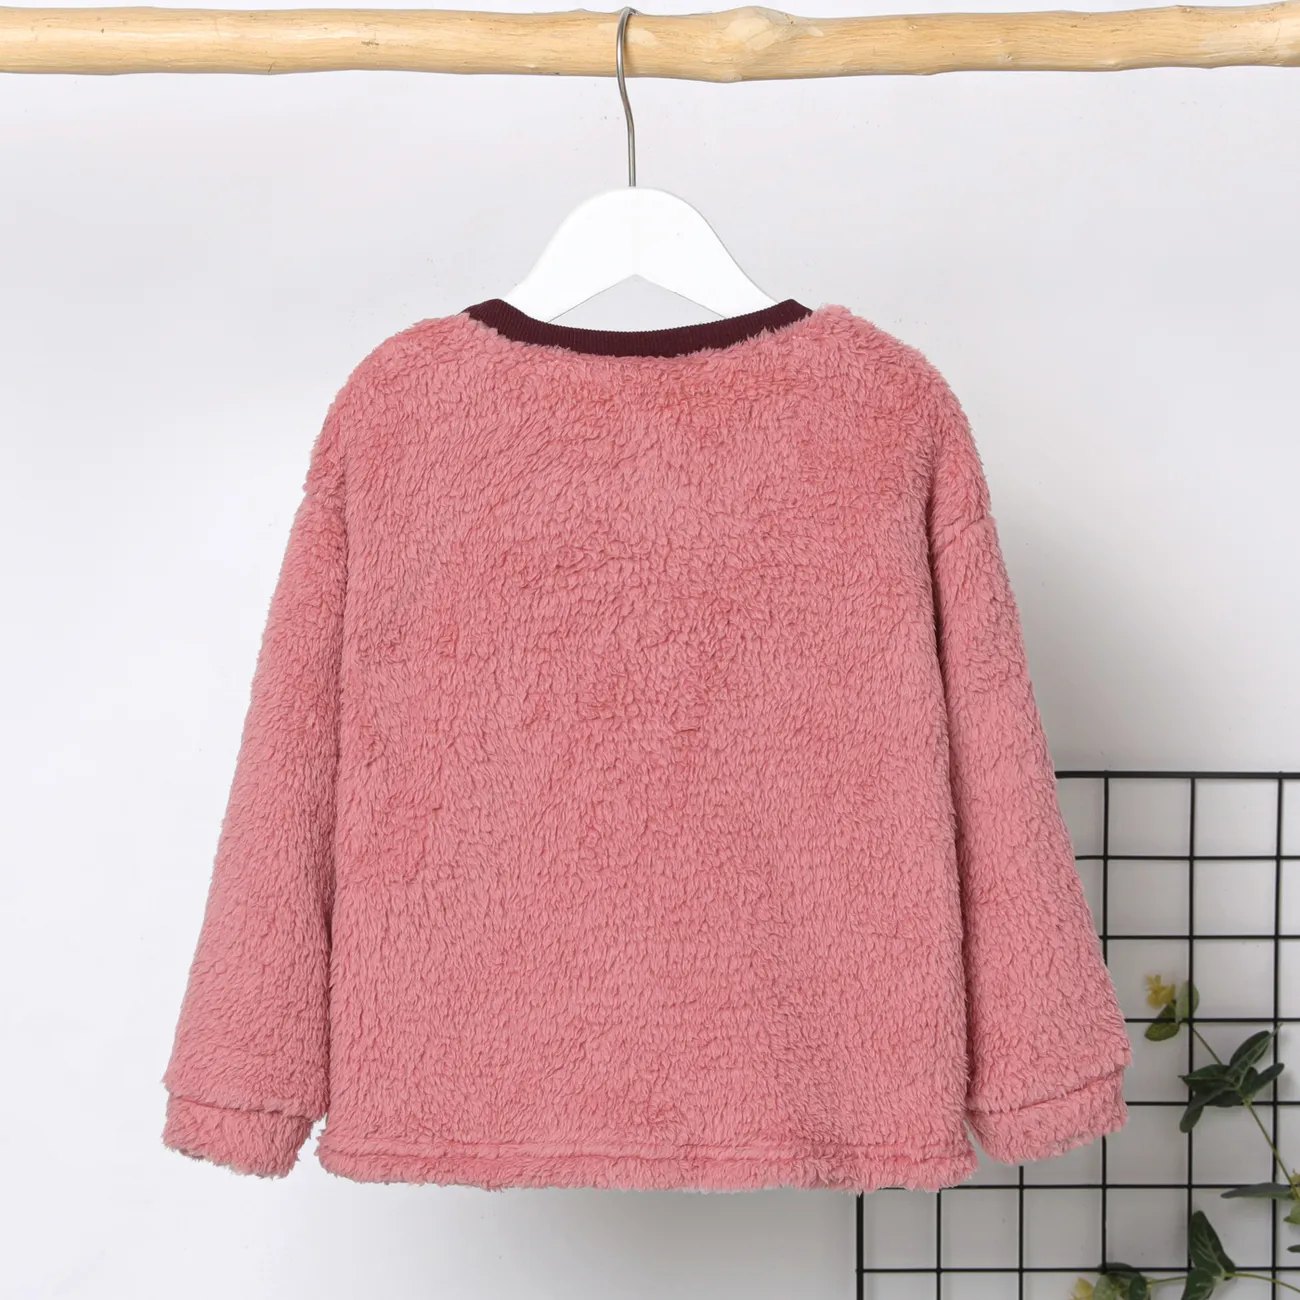 Kinder Mädchen Stoffnähte Pullover Sweatshirts rot big image 1